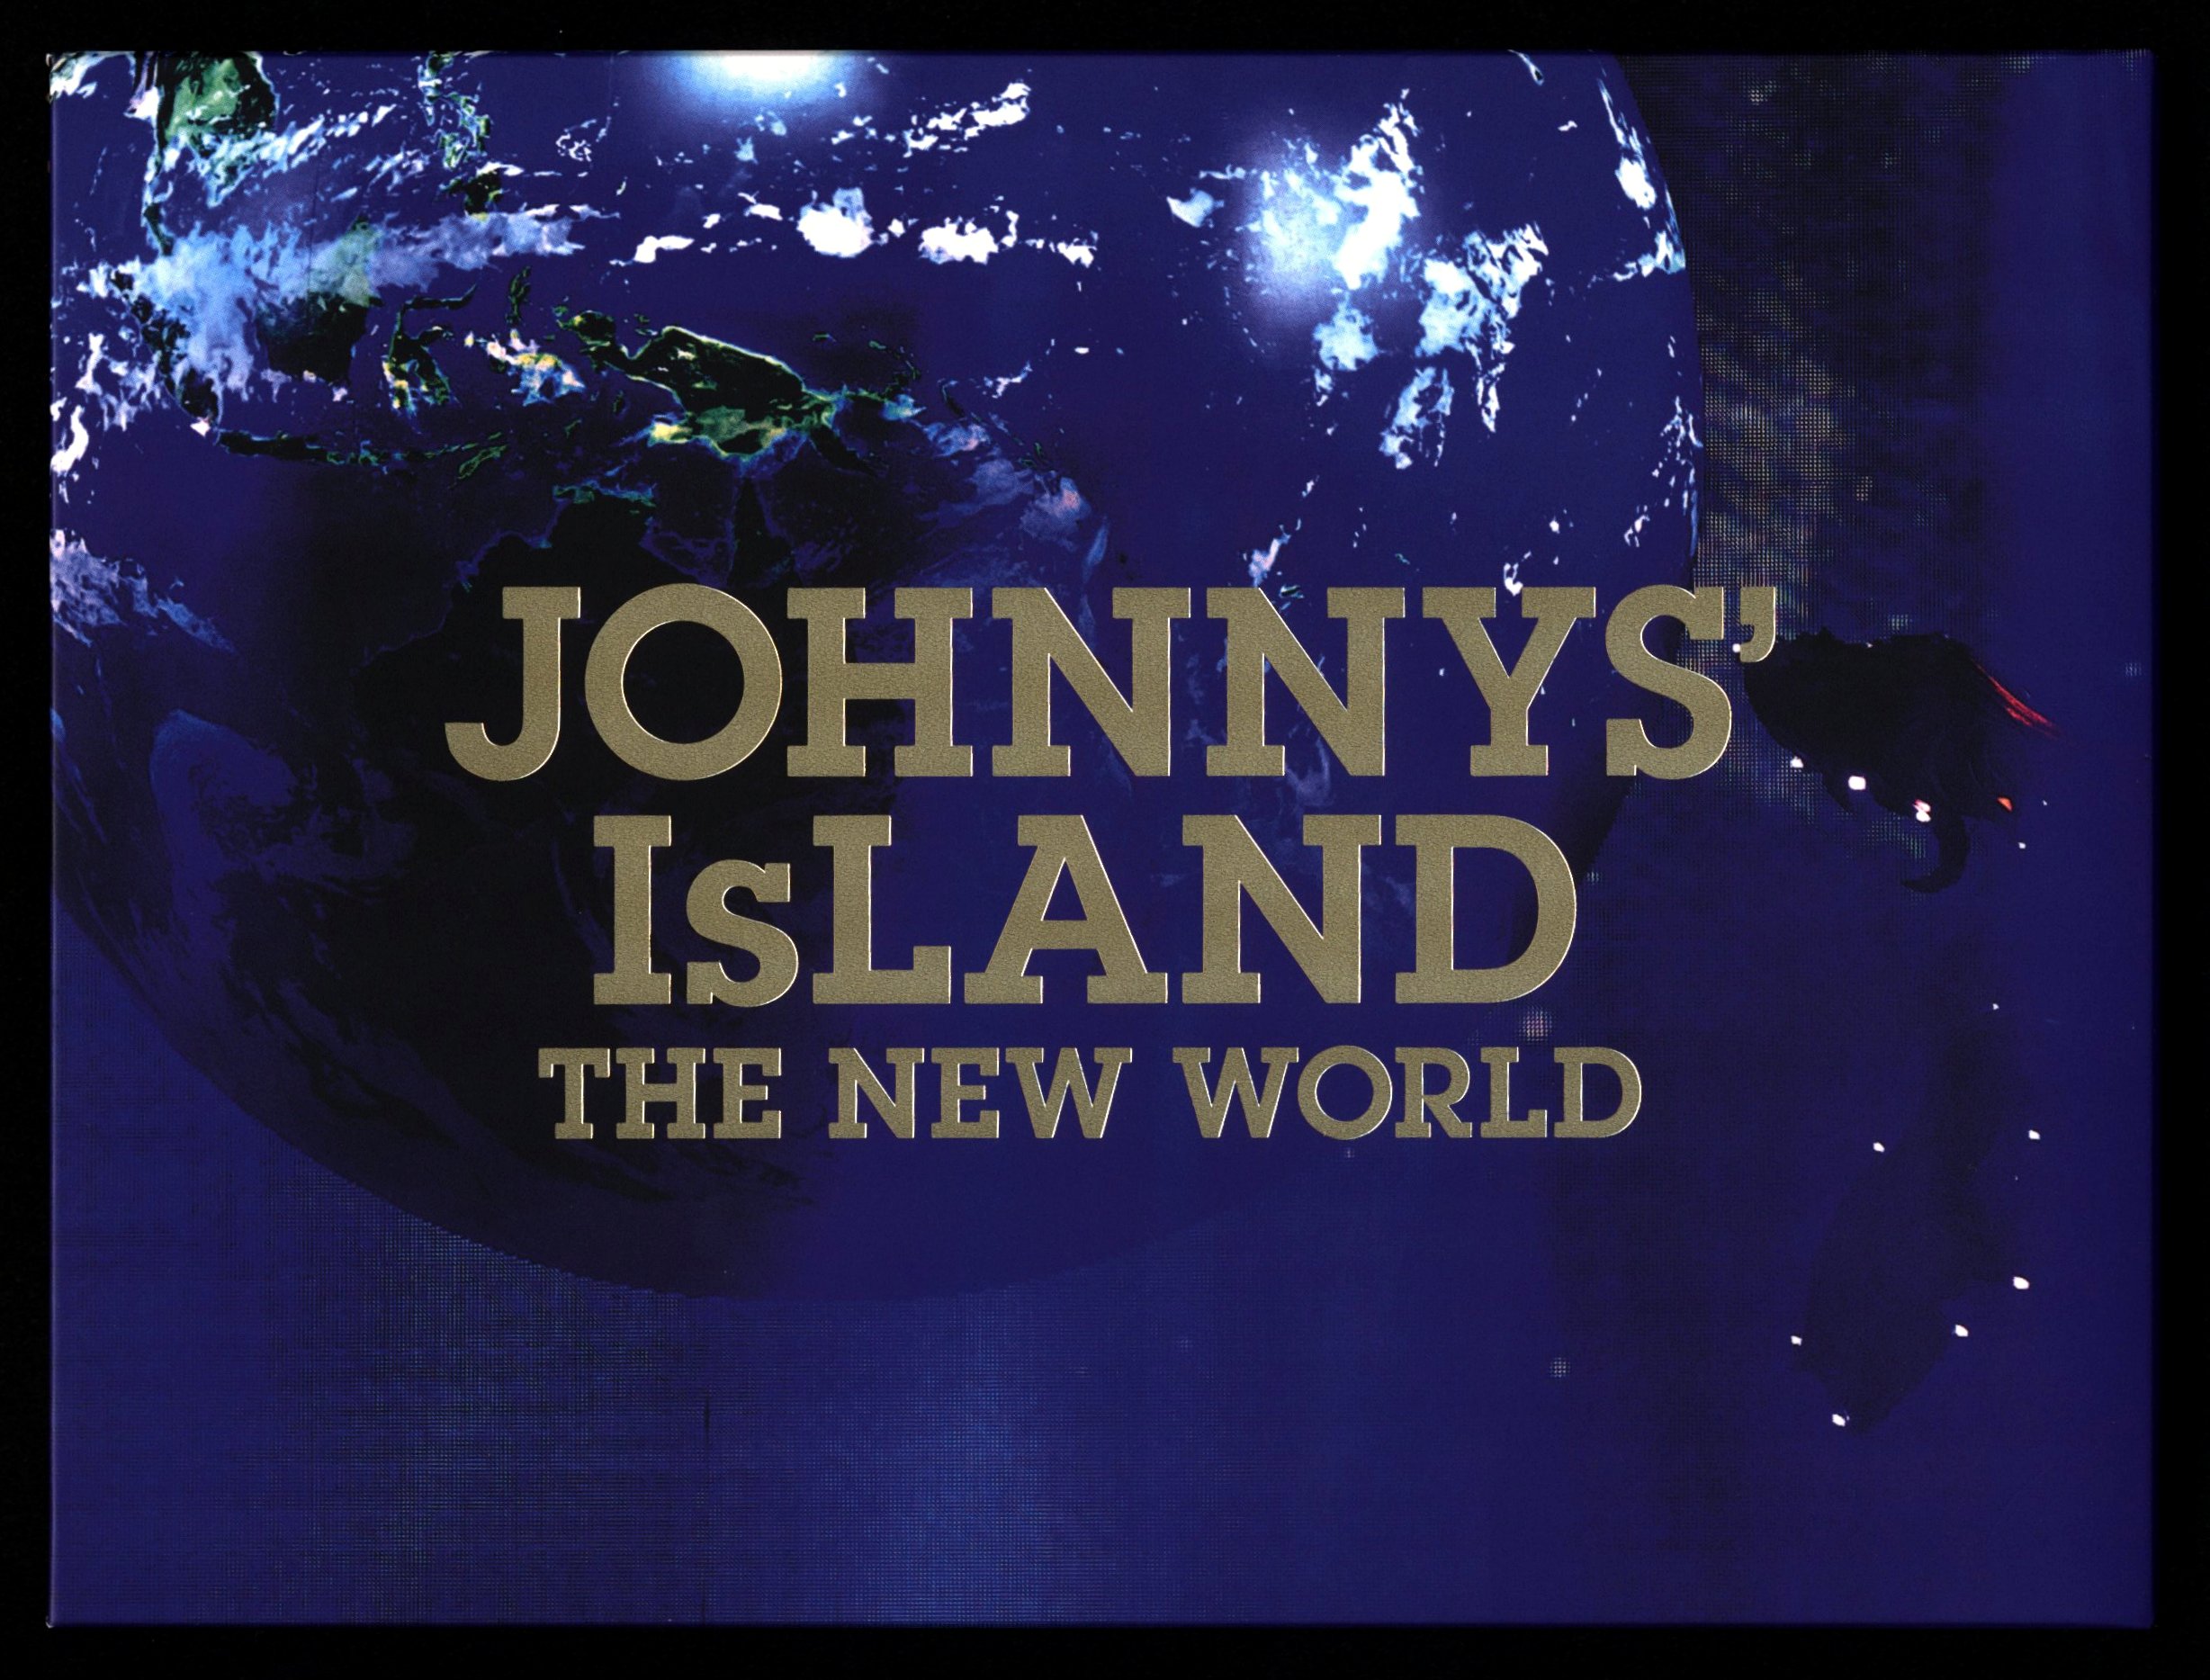 JOHNNYS' IsLAND THE NEW WORLD DVD